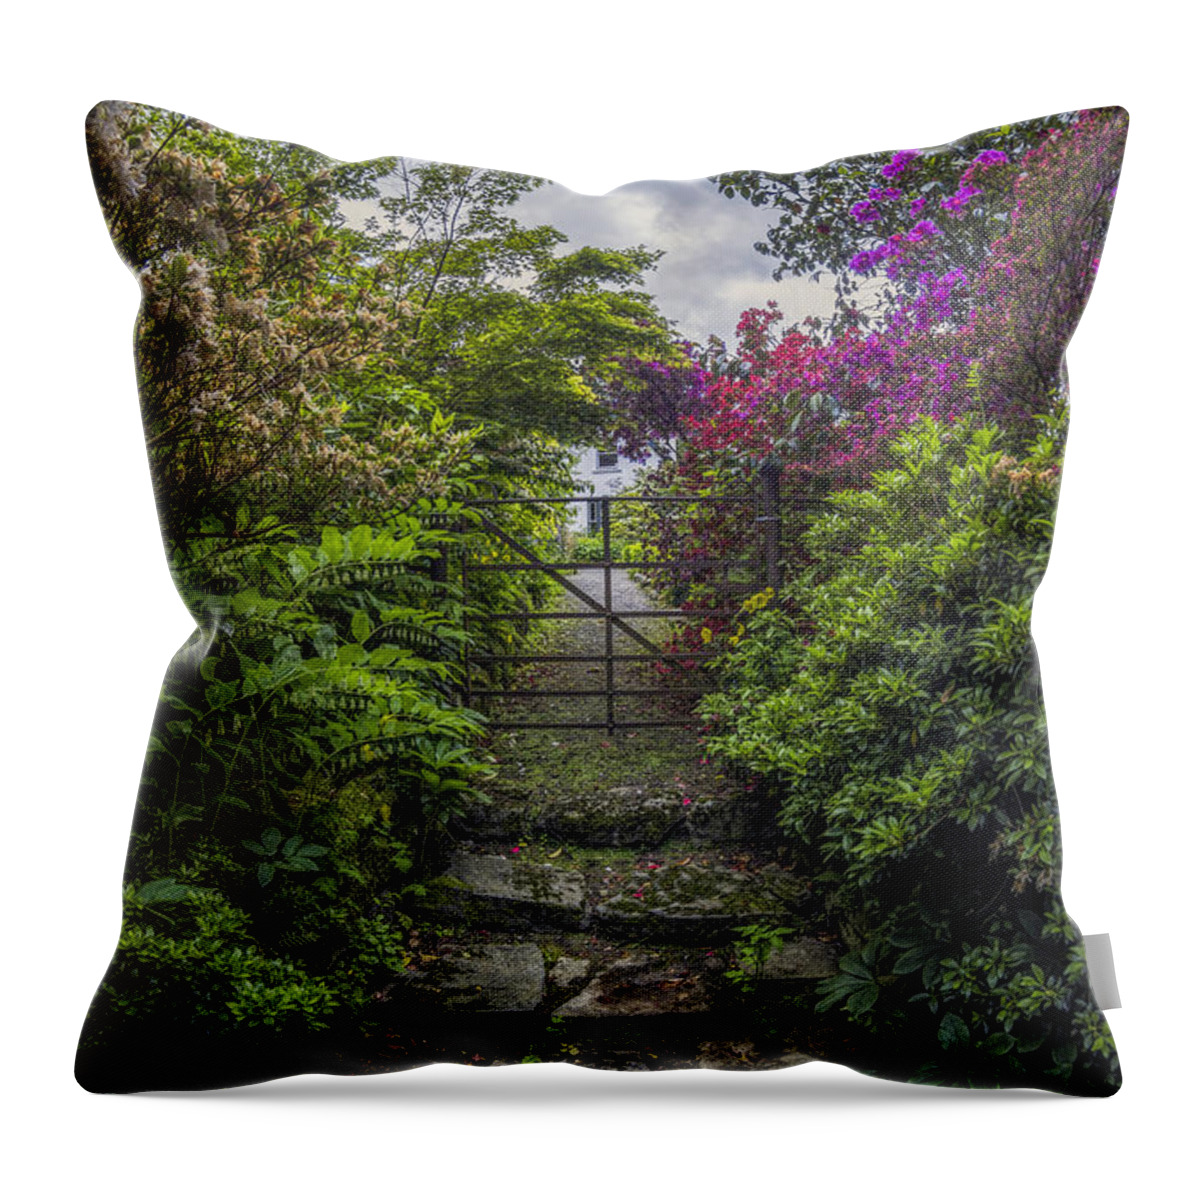 Garden Throw Pillow featuring the photograph Enchanted Garden by Ian Mitchell